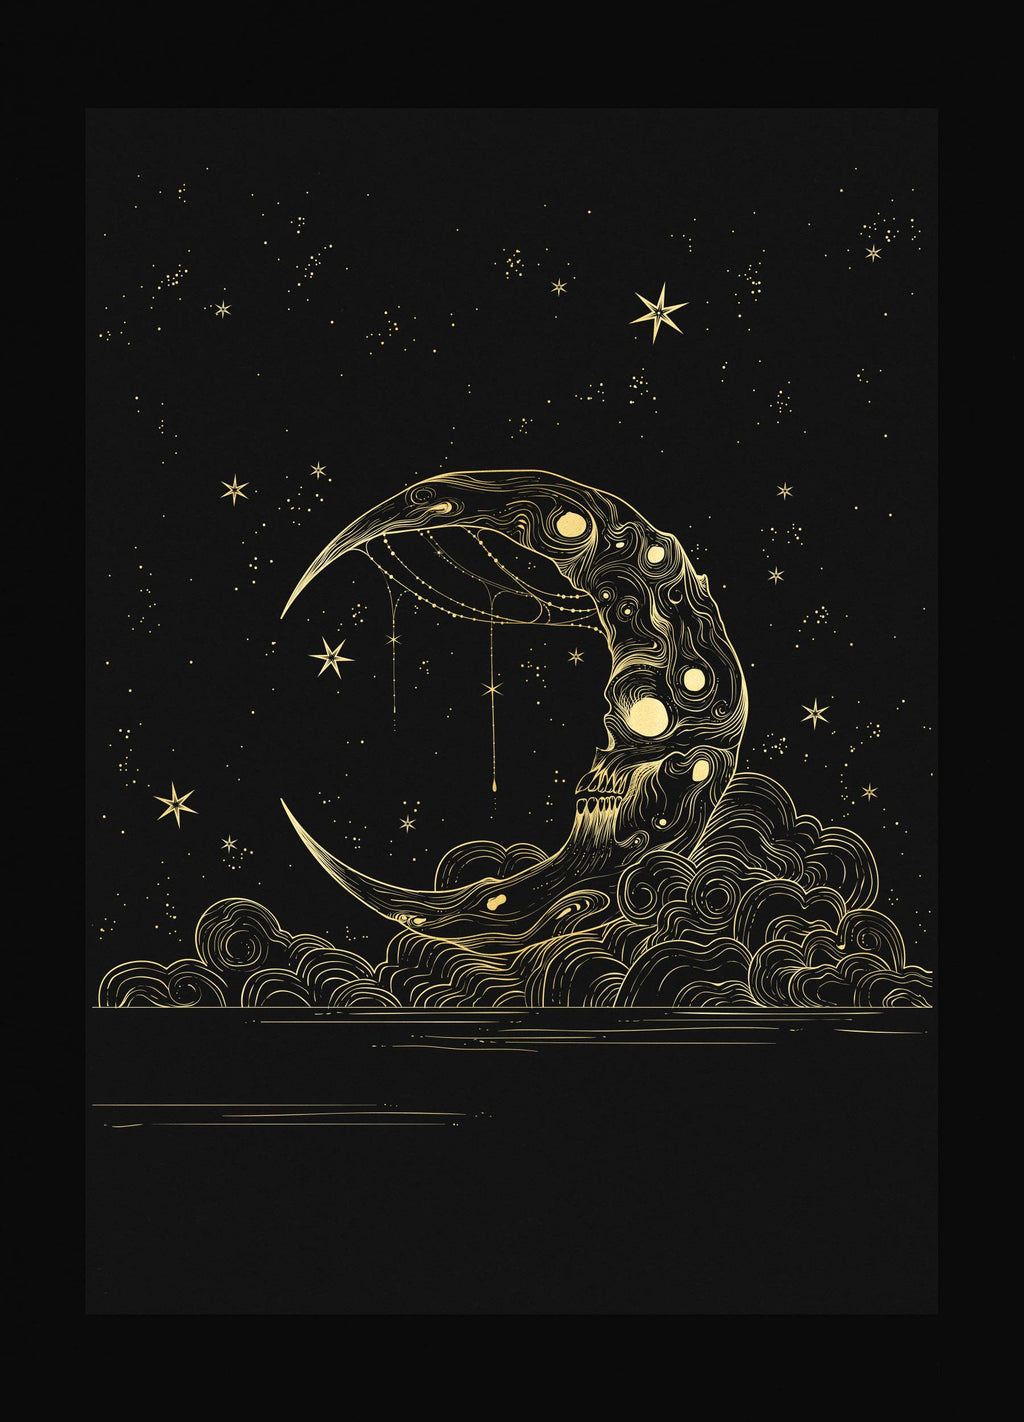 Skull Moon Samhain Print in gold foil on black paper by Cocorrina & Co